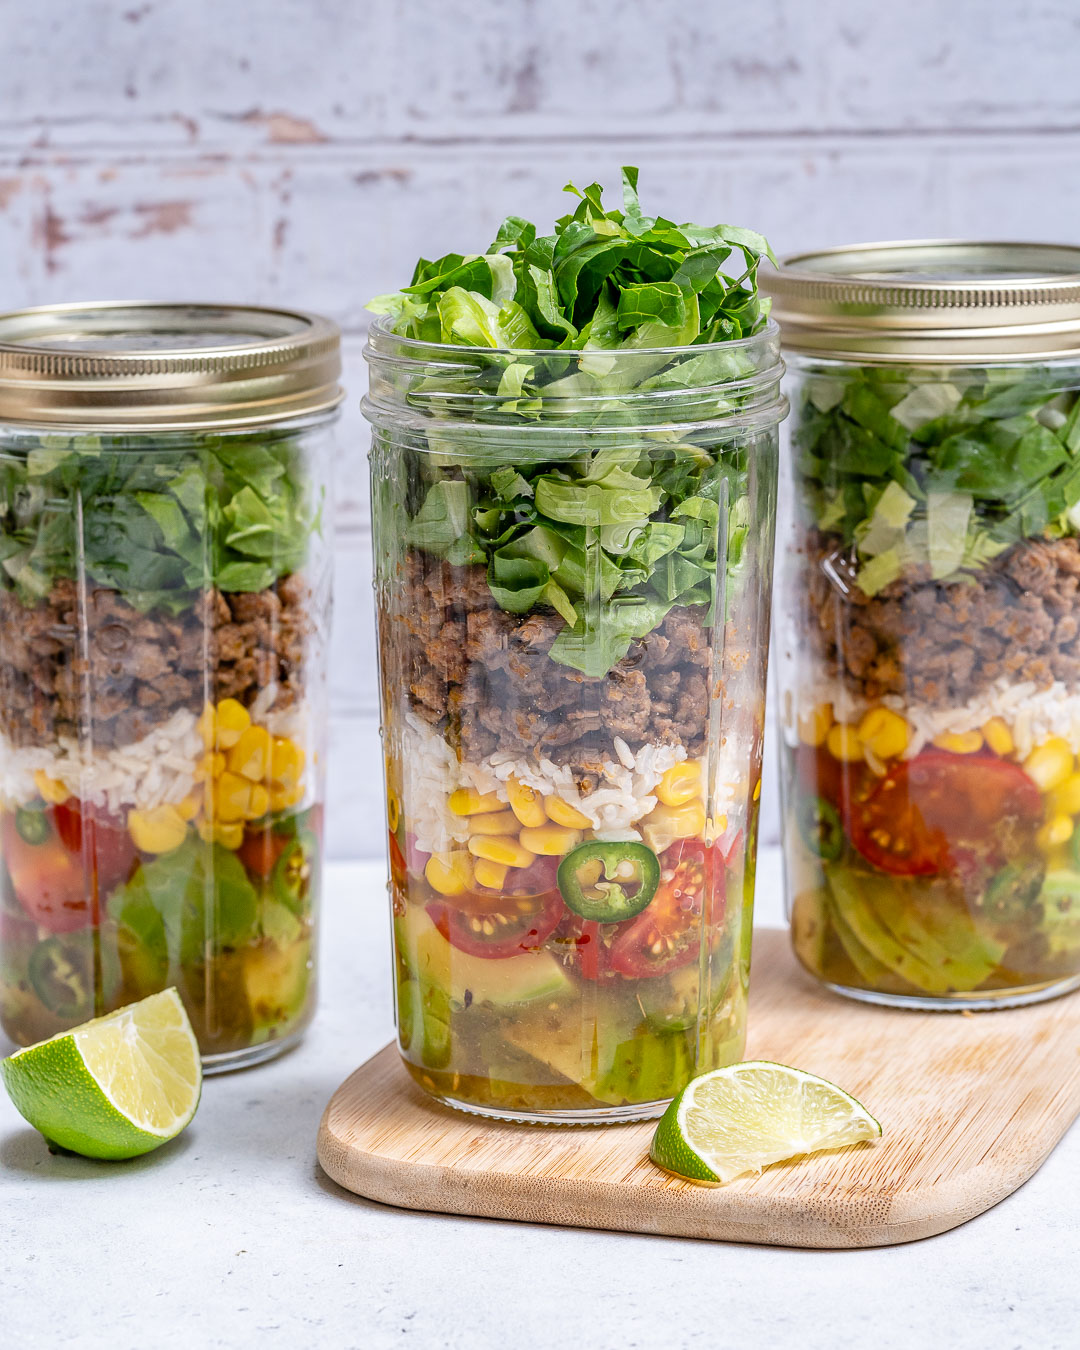 https://cleanfoodcrush.com/wp-content/uploads/2020/01/Clean-Eating-Taco-Mason-Jar-Salads-for-Meal-Prep.jpg